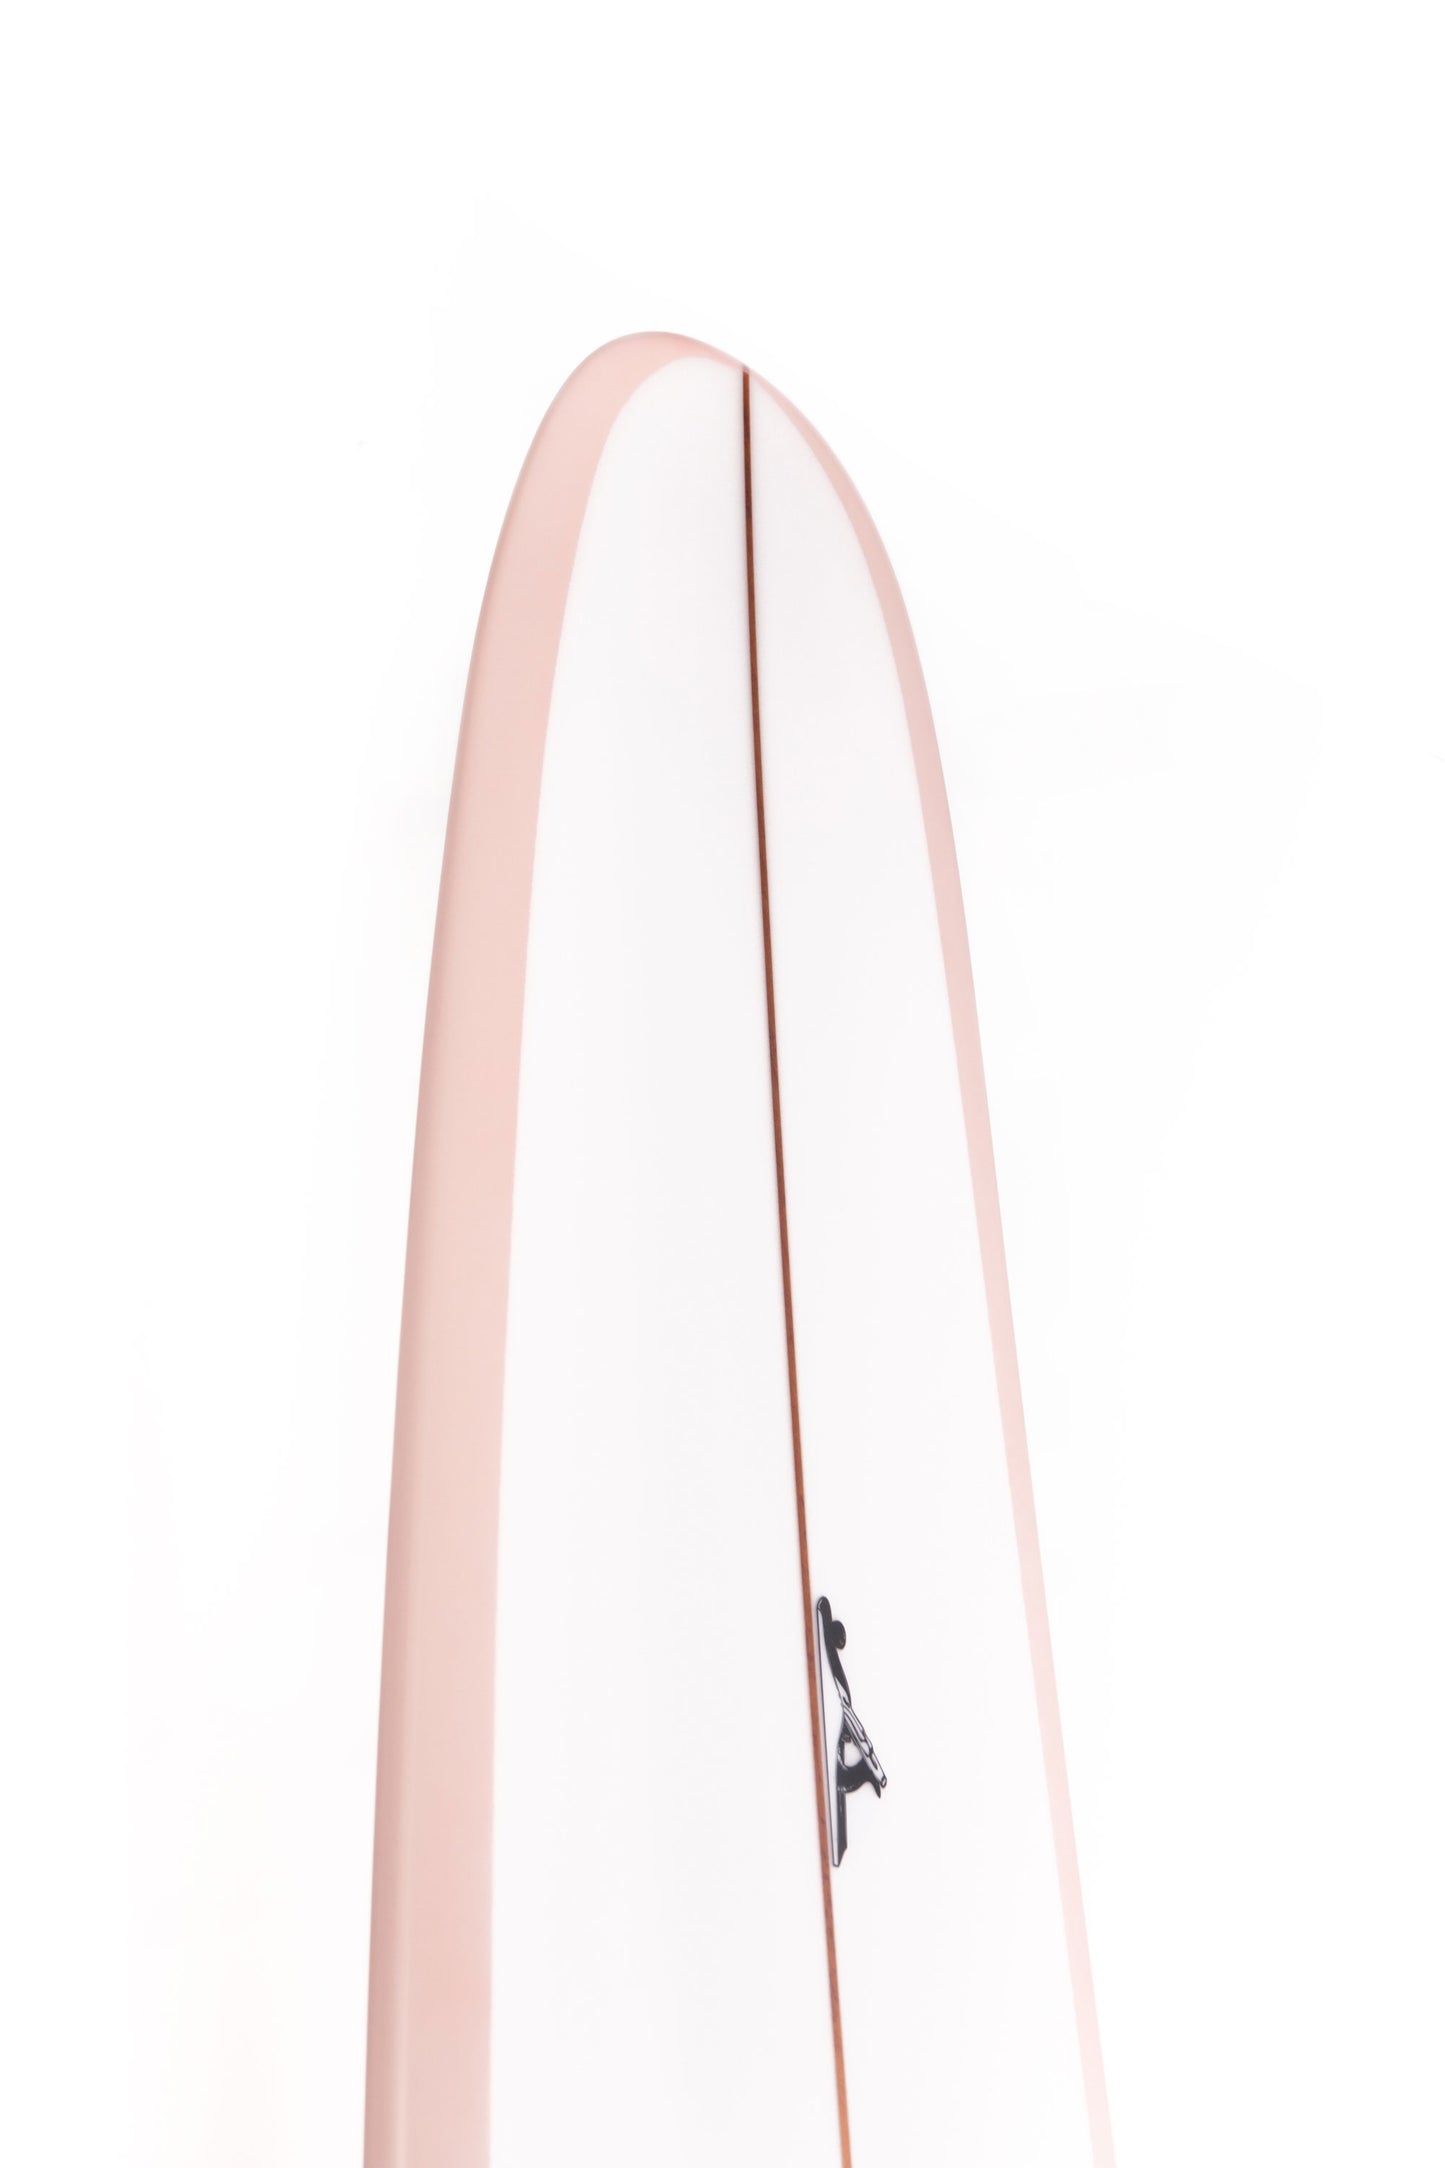 
                  
                    Pukas-Surf-Shop-Thomas-Bexon-Surfboards-Keeper-Thomas-Bexon-9_8
                  
                